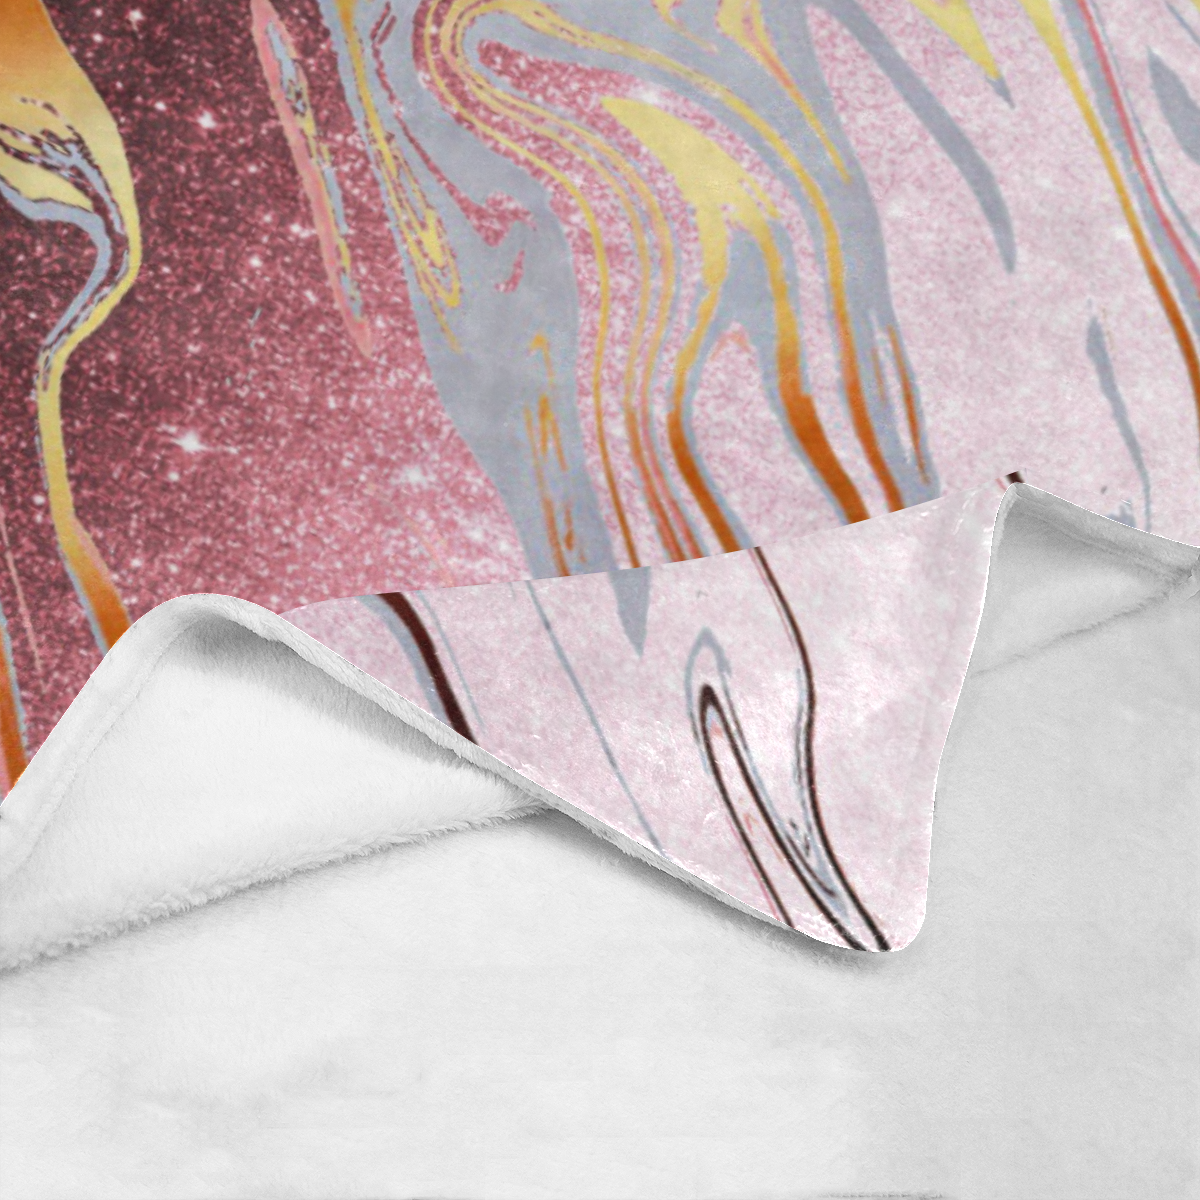 Rose gold glitter marble Ultra-Soft Micro Fleece Blanket 70''x80''